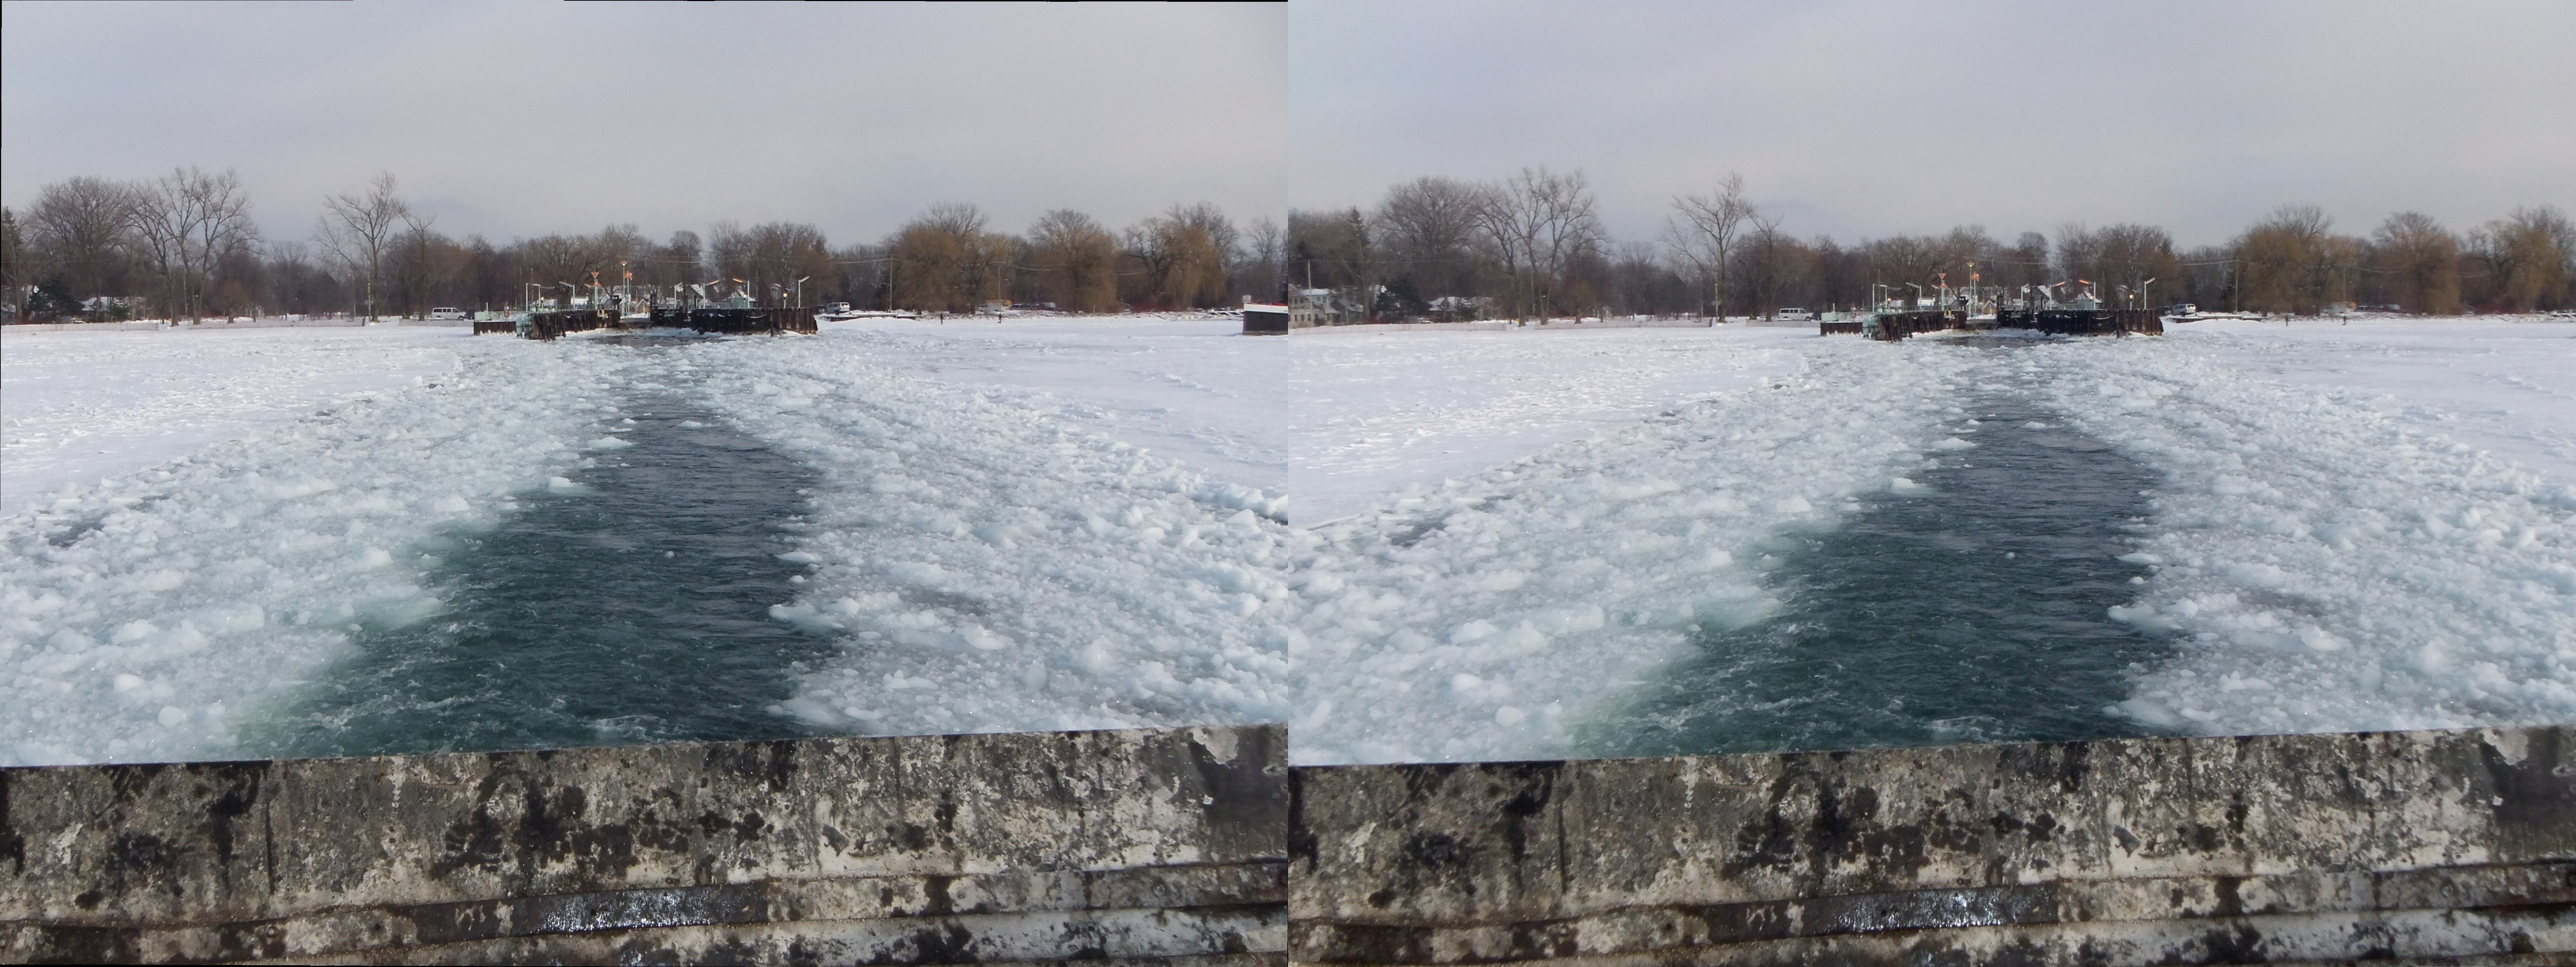 File:2014-02-08 Stereoscopy - Toronto Islands - 35 Frozen Harbor.jpg ...